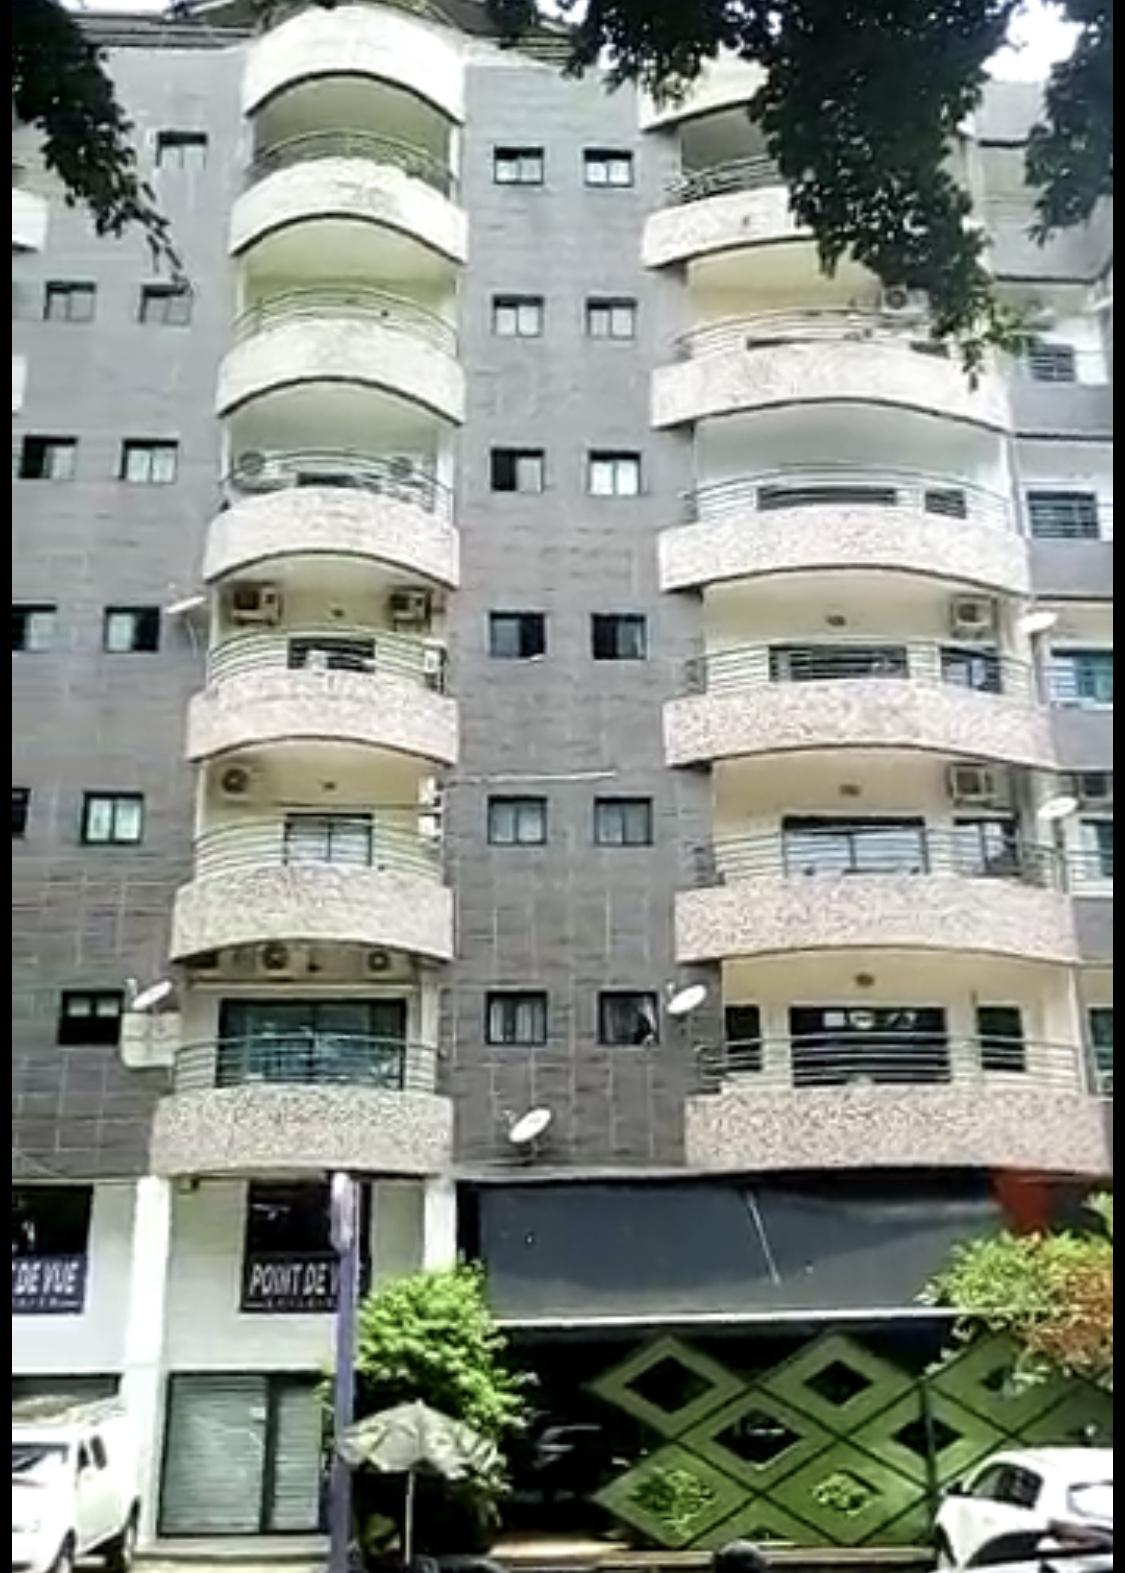 Vente d'un Immeuble à 600.000.000 FCFA  : Abidjan-Marcory (Zone 4)